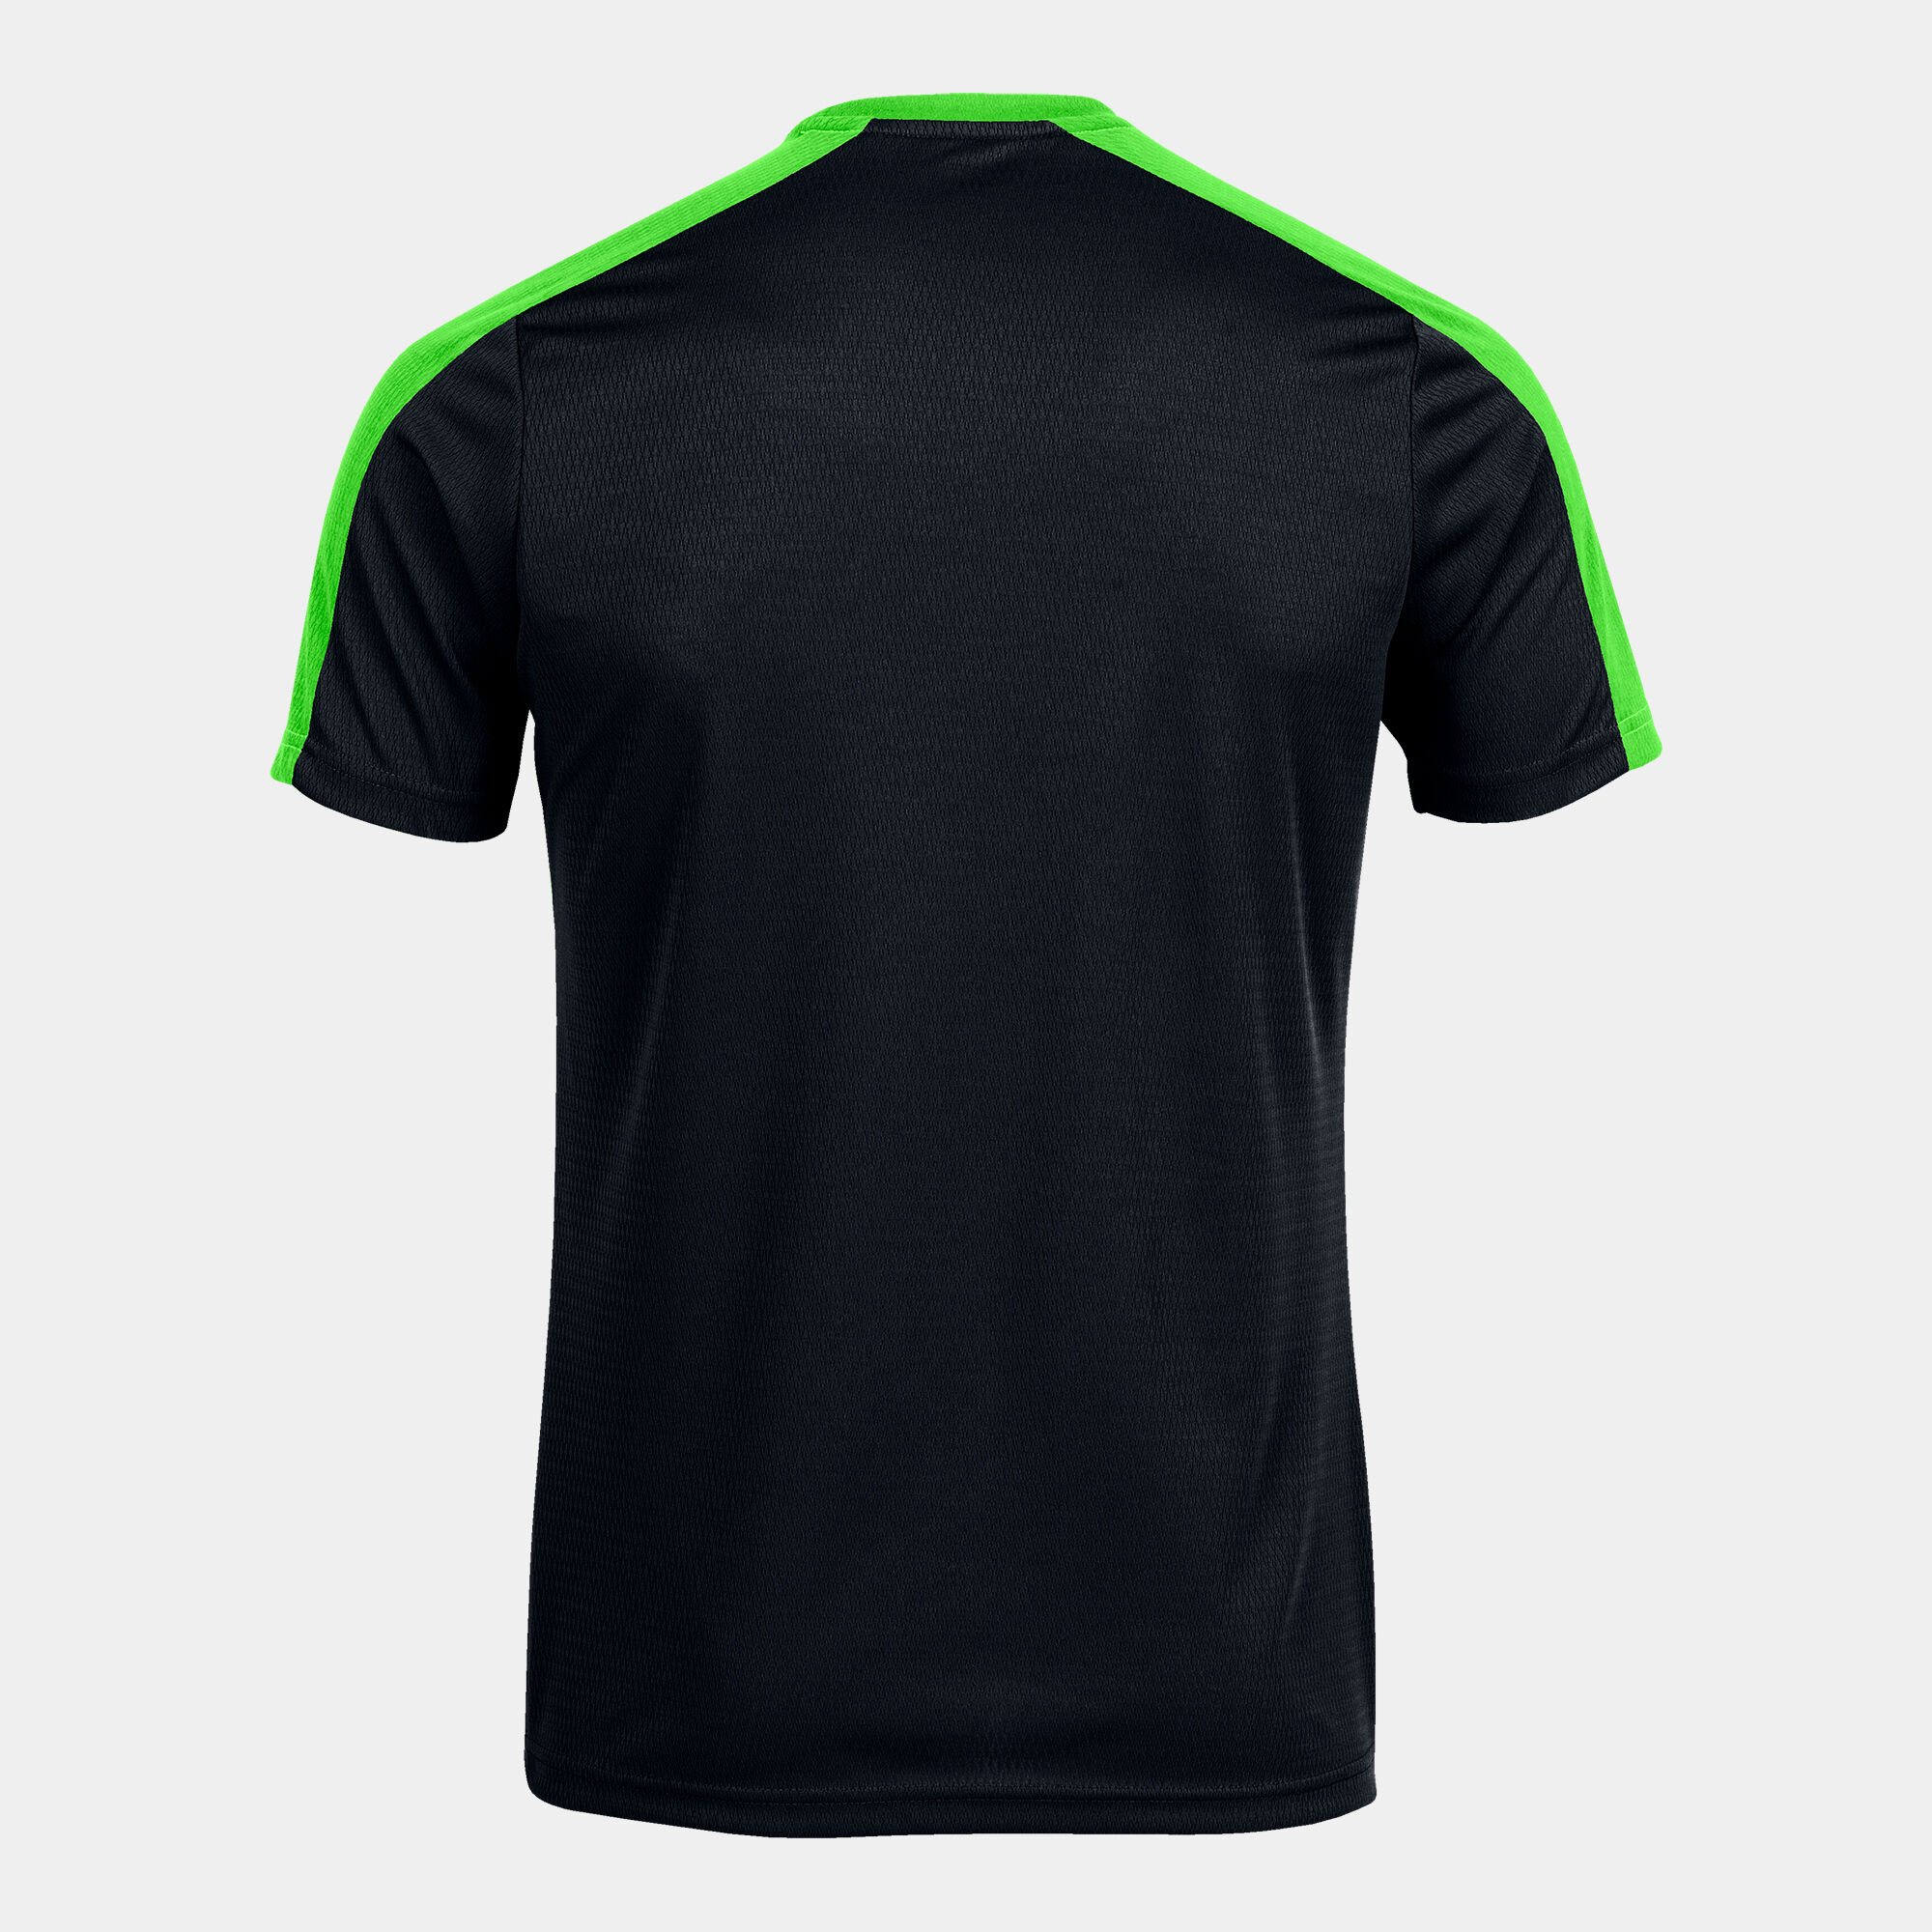 Shirt short sleeve man Eco Championship black fluorescent green